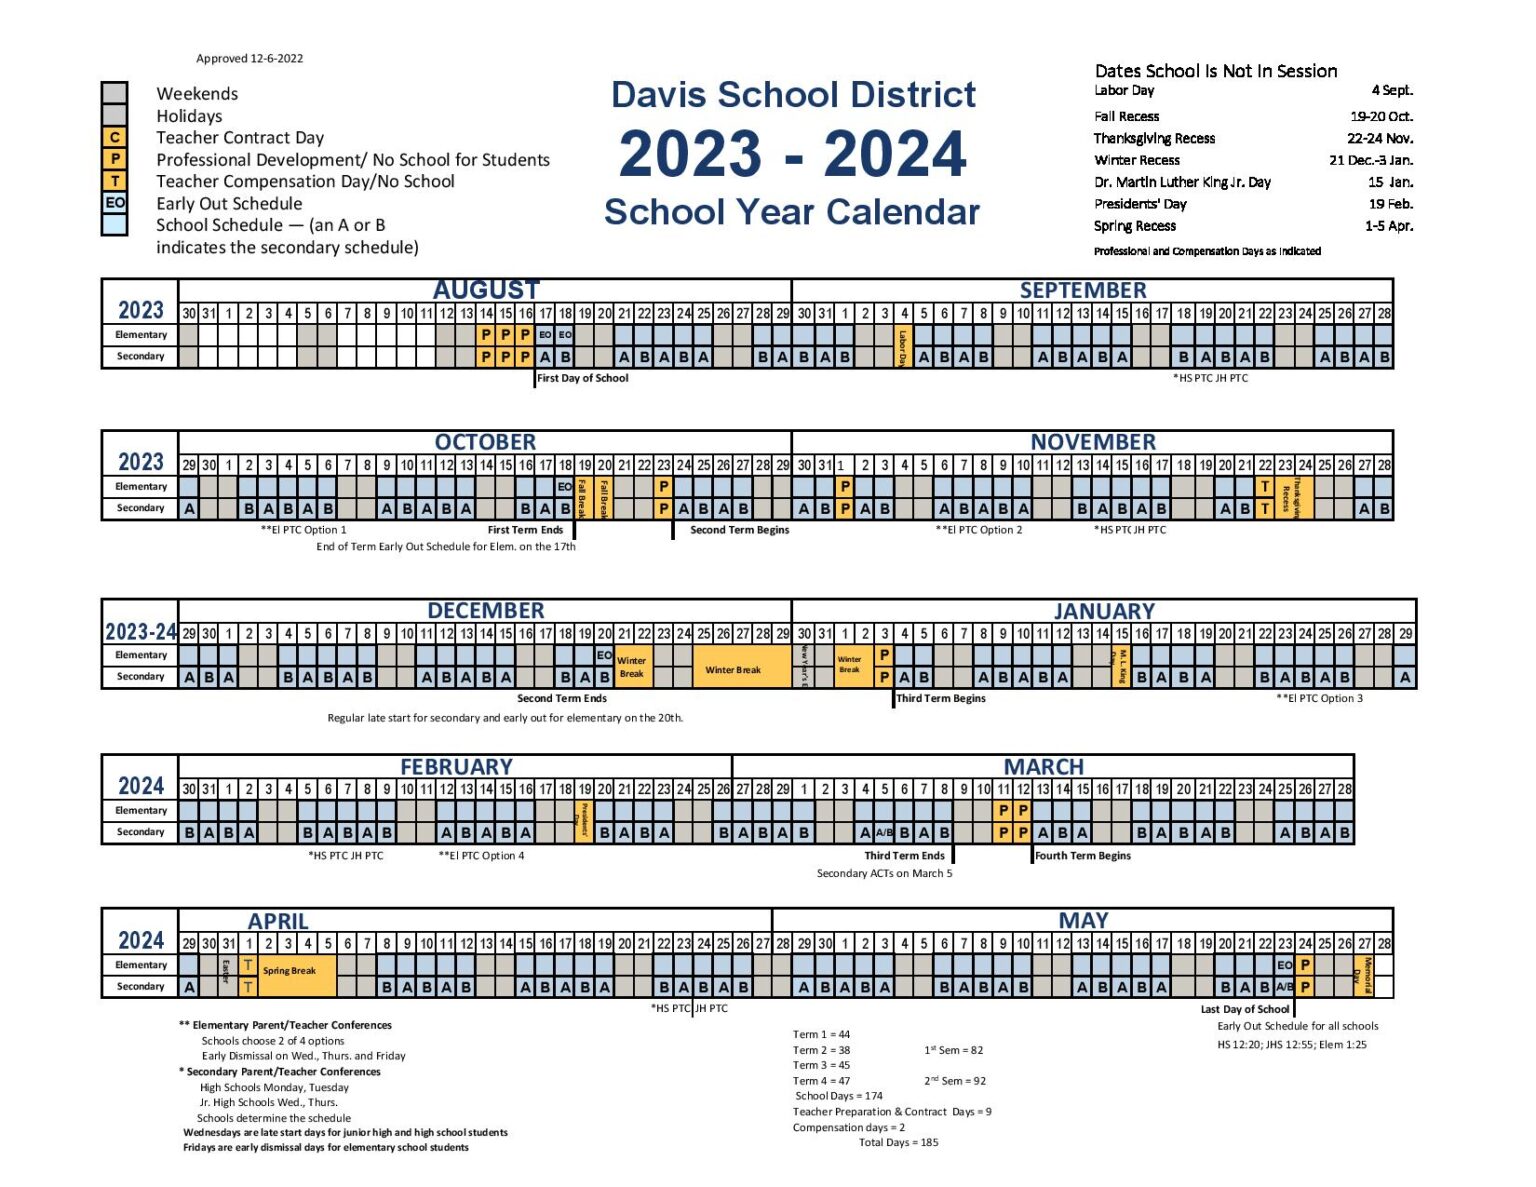 Davis School District Calendar Holidays 2023 2024